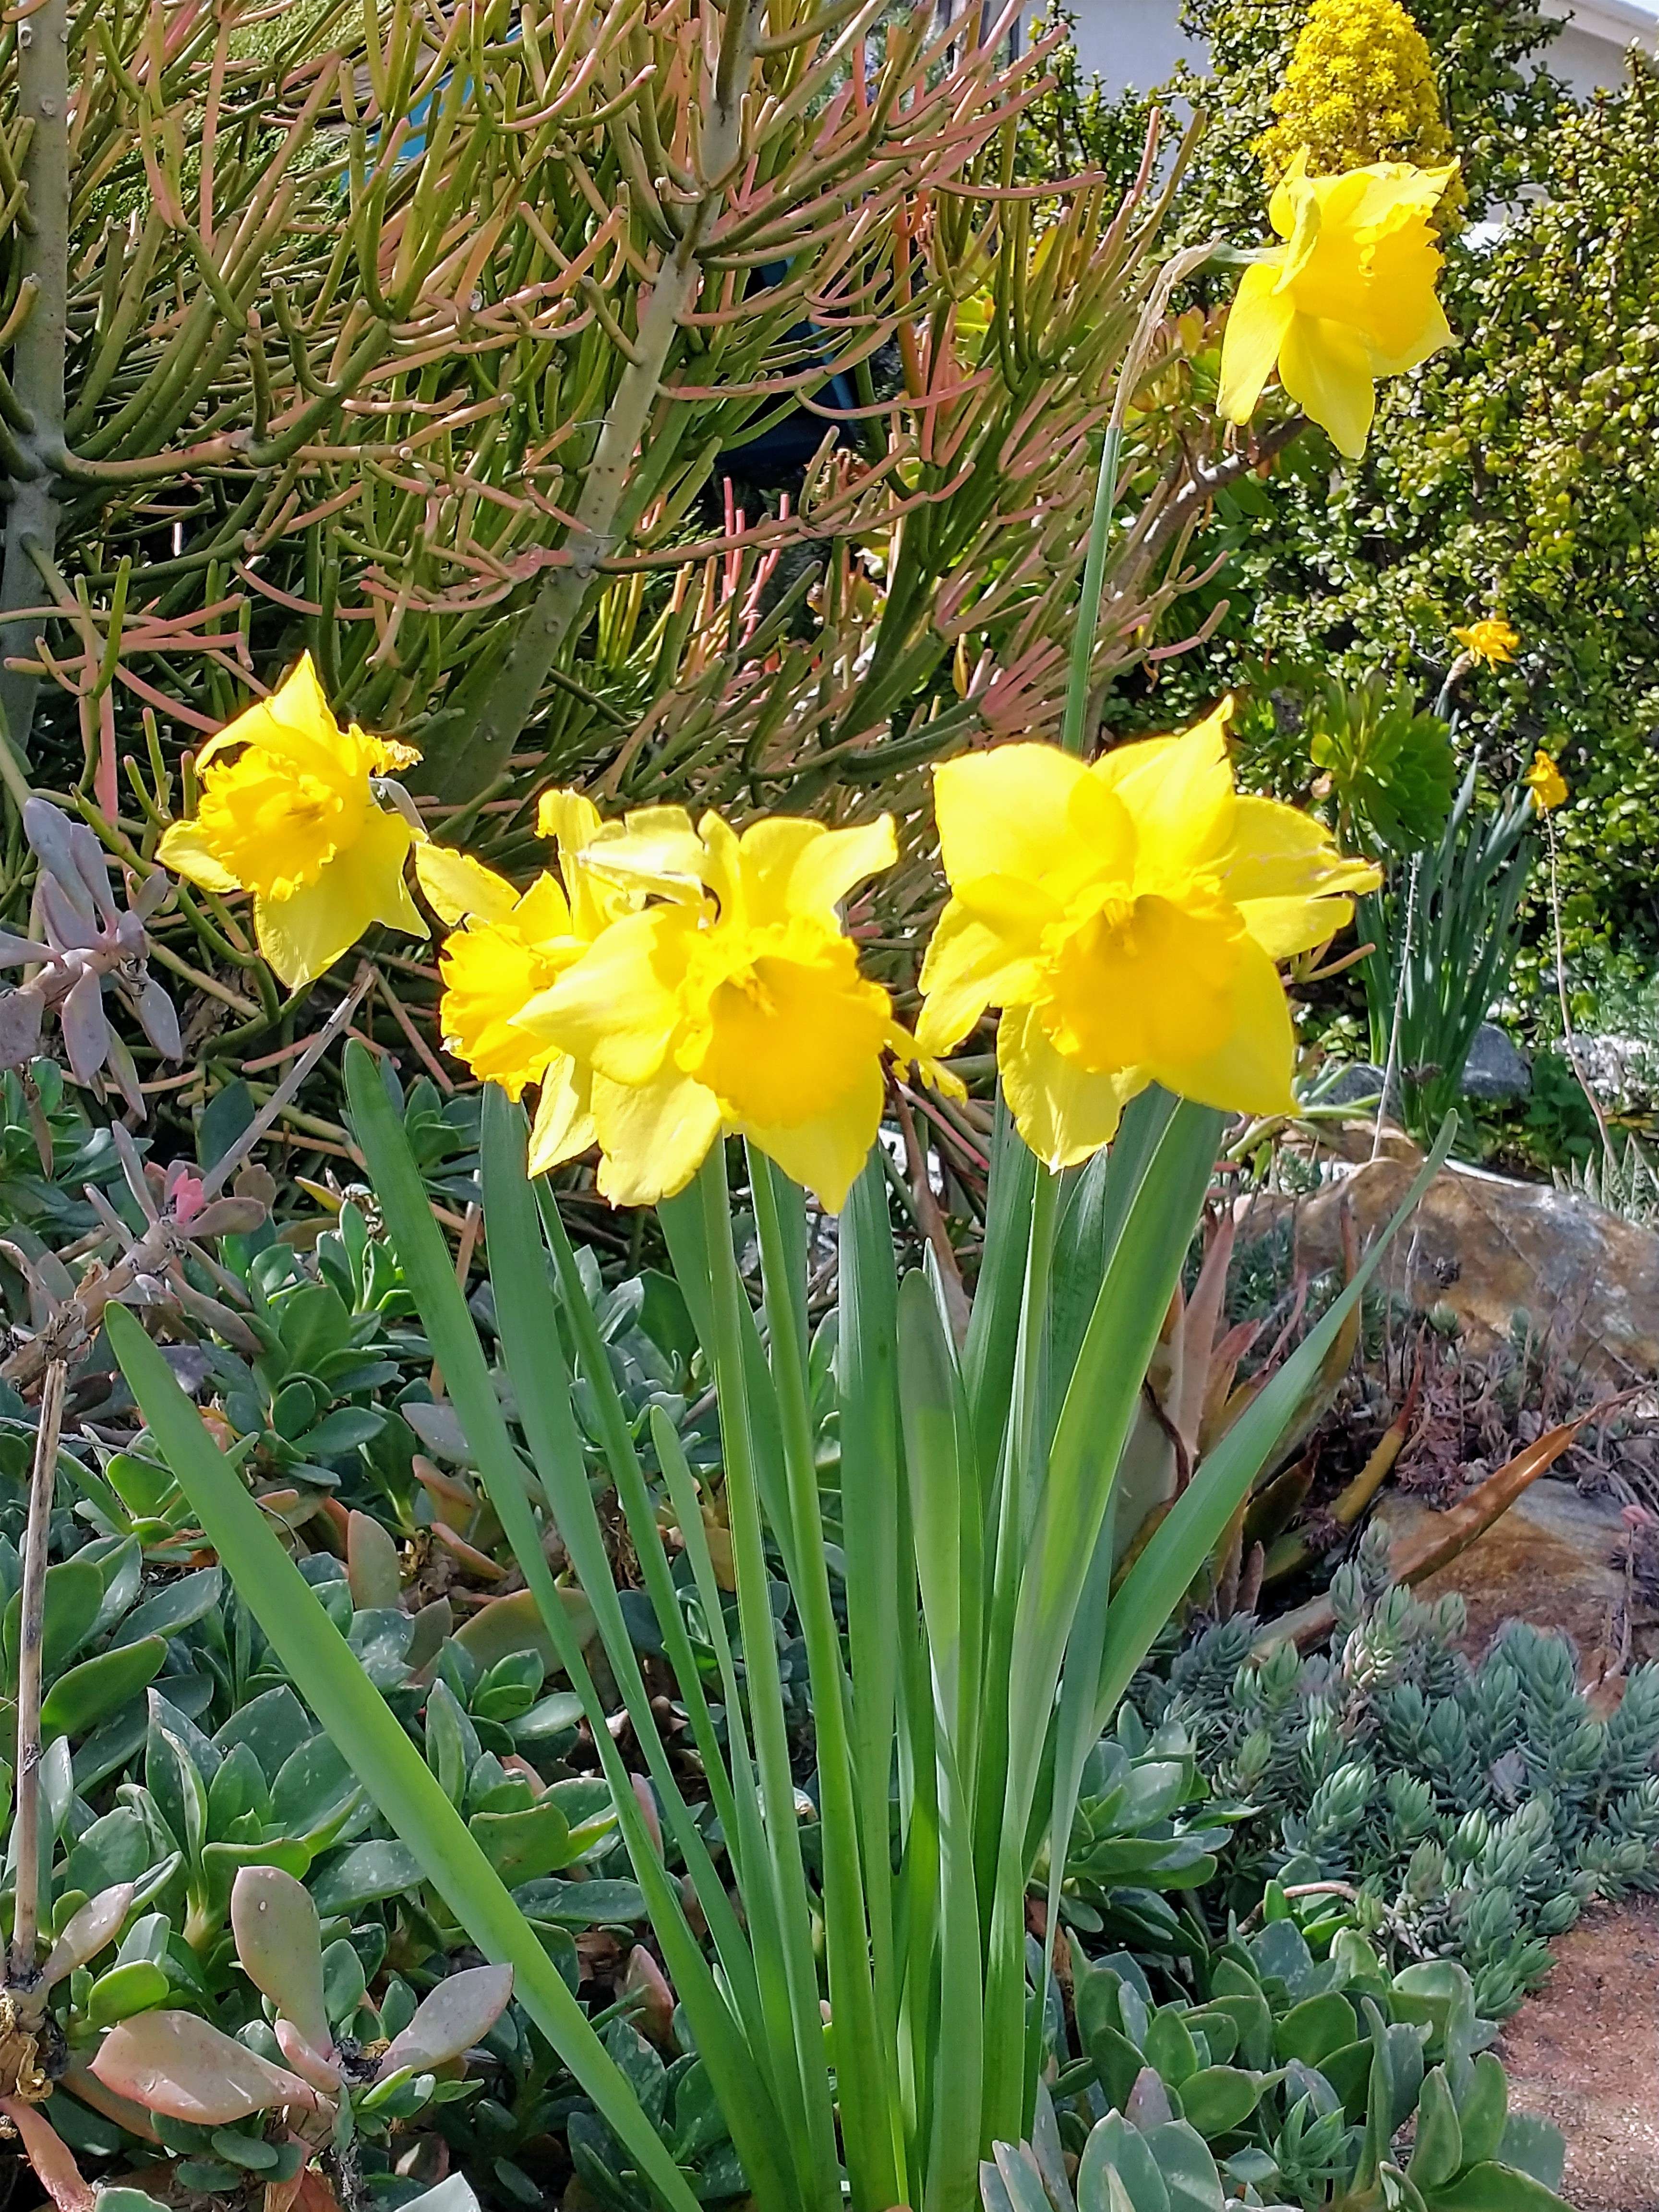 Four daffodils from neighbor's garden